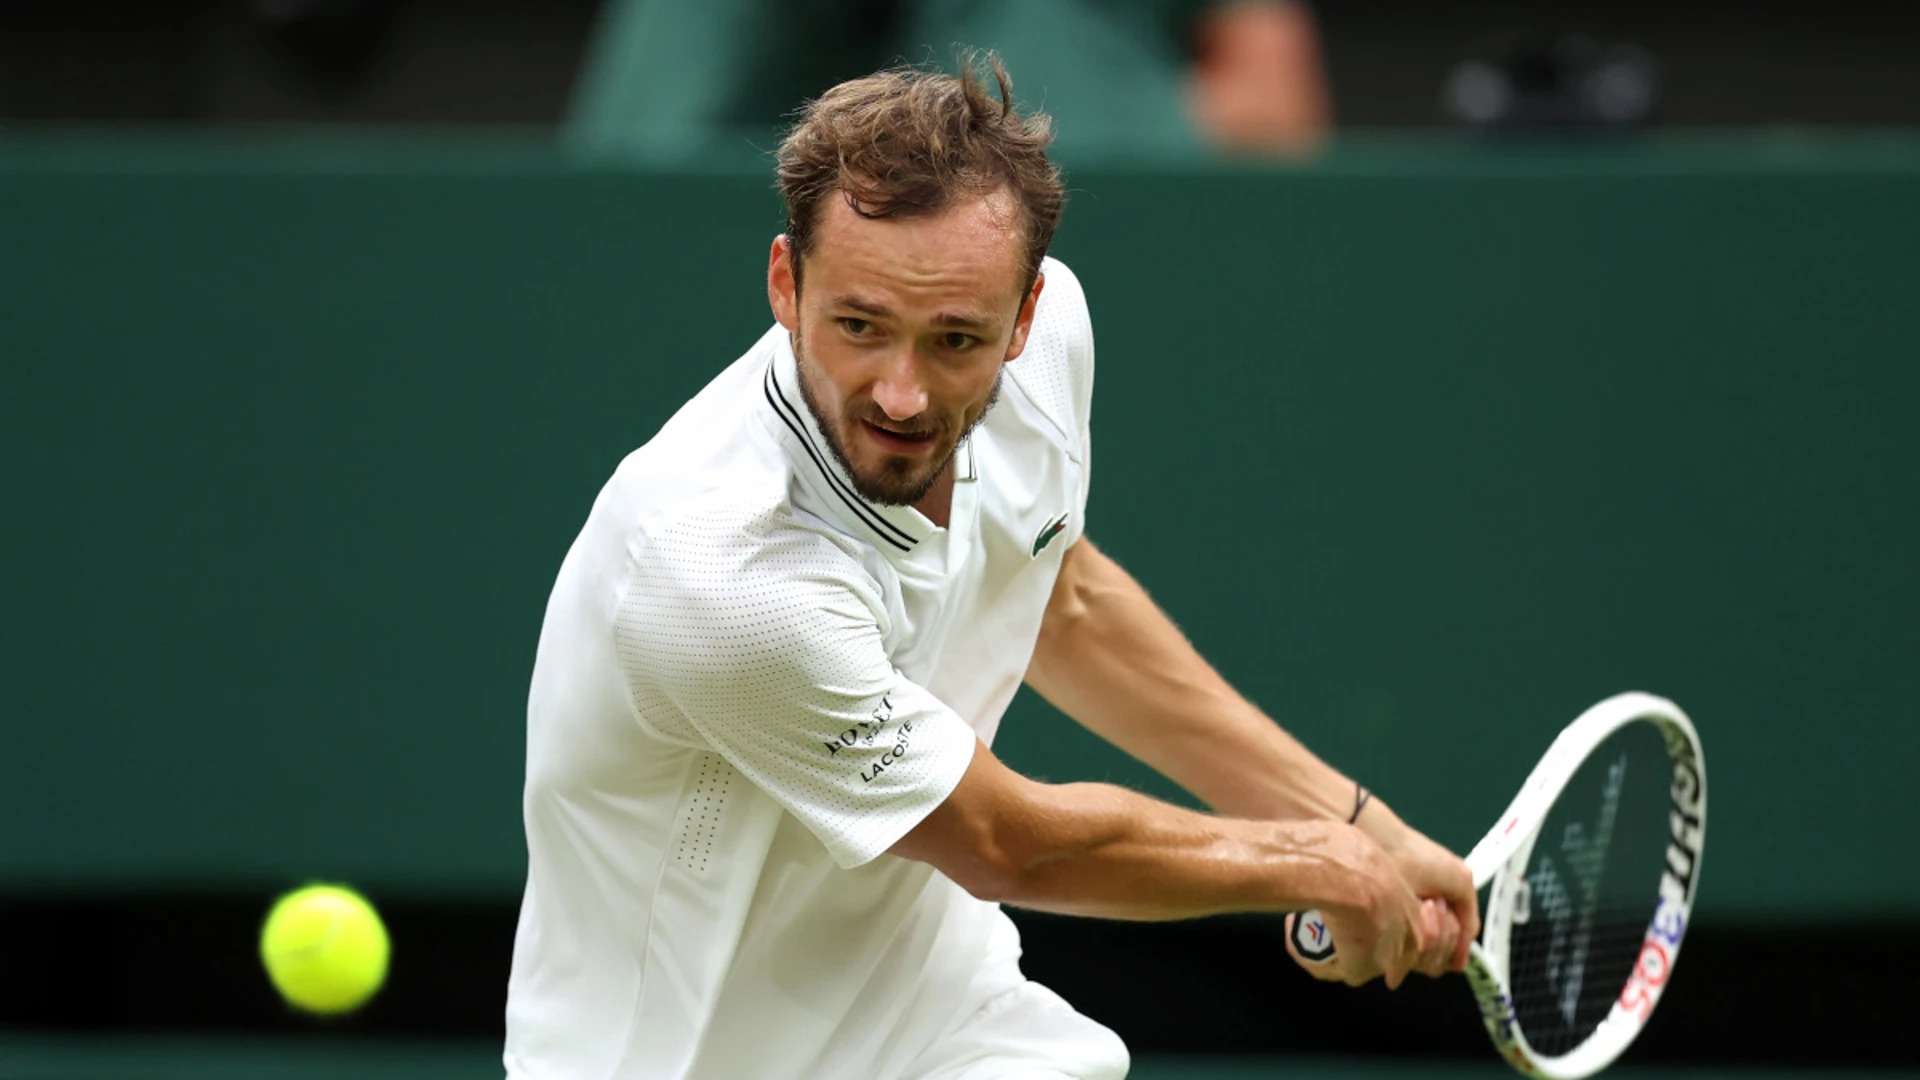 Hard-court specialist Medvedev gunning for grass-court breakthrough at Wimbledon